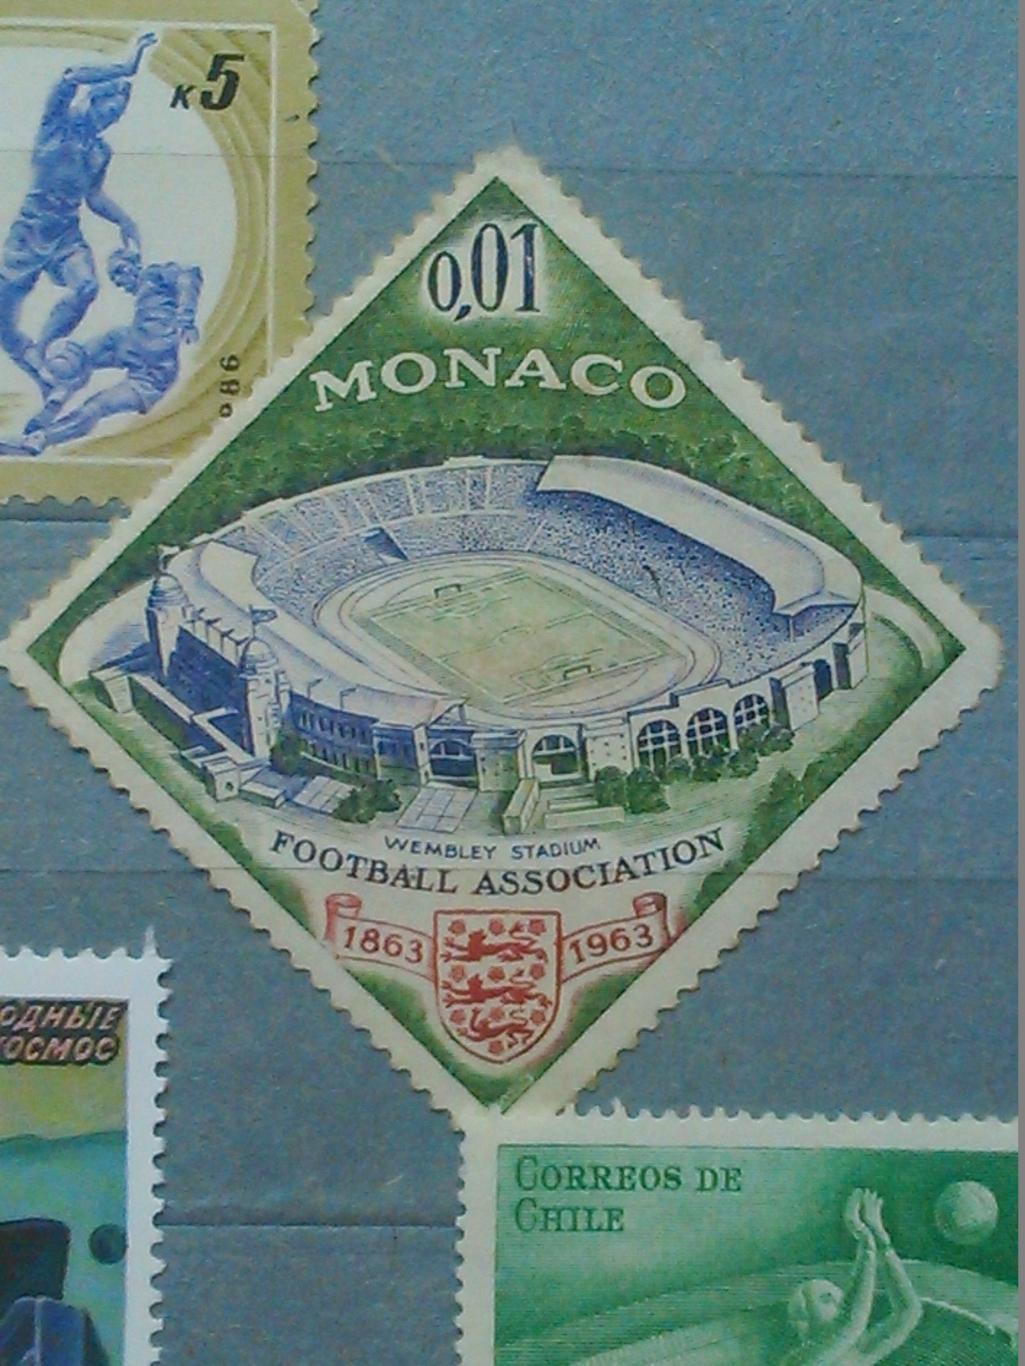 Марка Монако-1963. № 752.0.01 100-летие футбола 1863-1963. Оптом скидки до 50%!